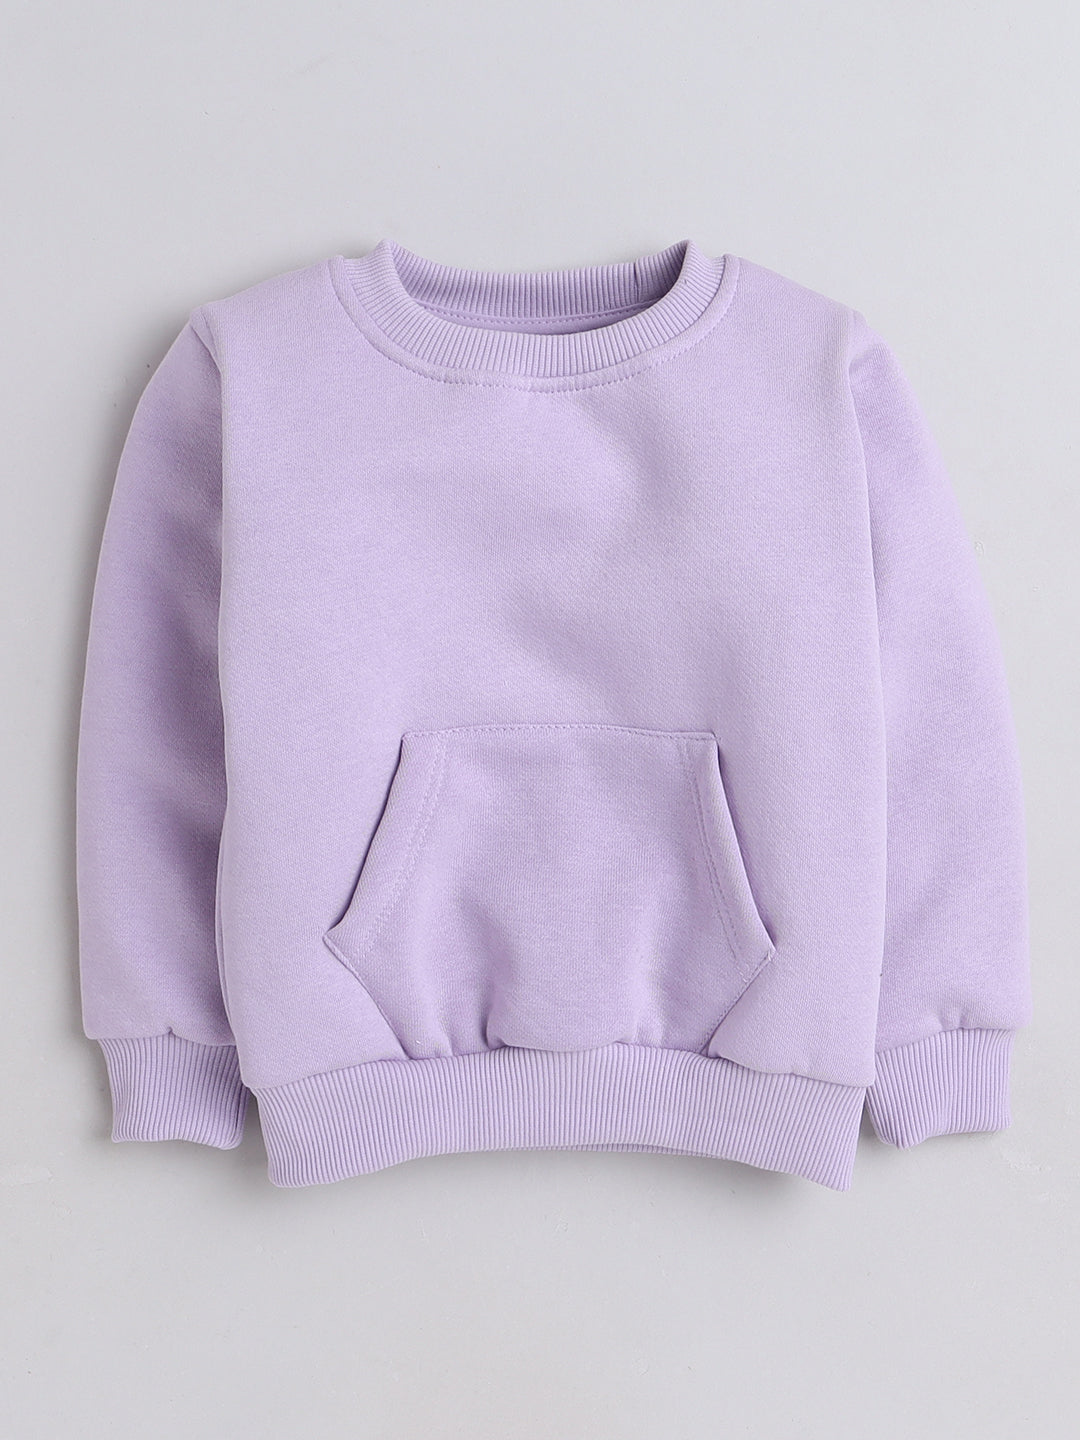 Knitting Doodles Kid's Sweatshirt with Warm Fleece and Pocket in front- Purple